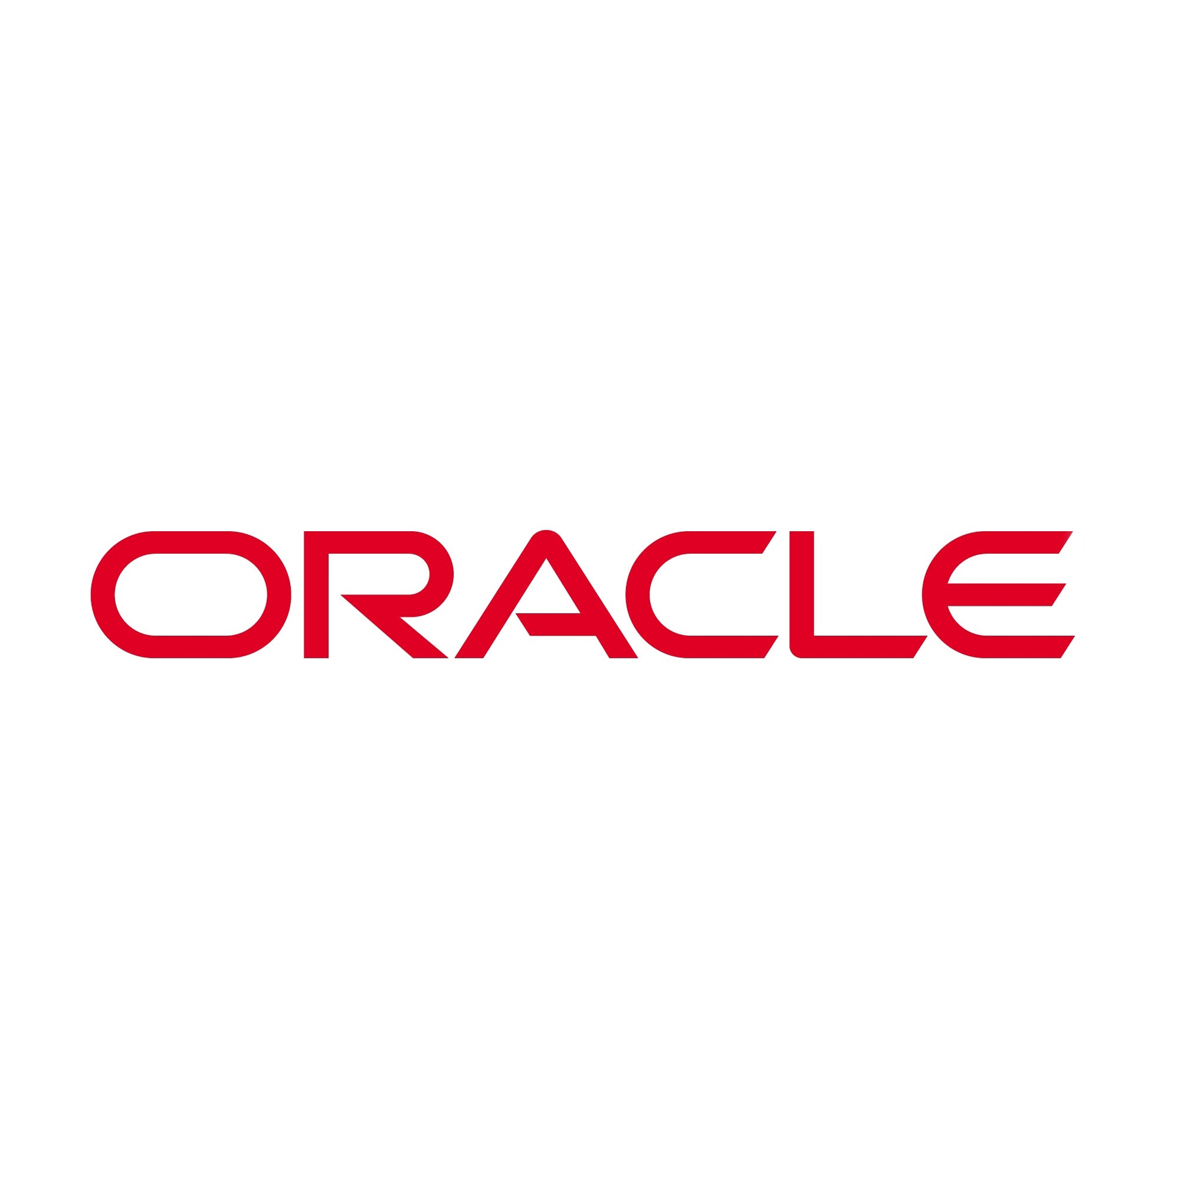  Top Enterprise CRM Solution Logo: Oracle